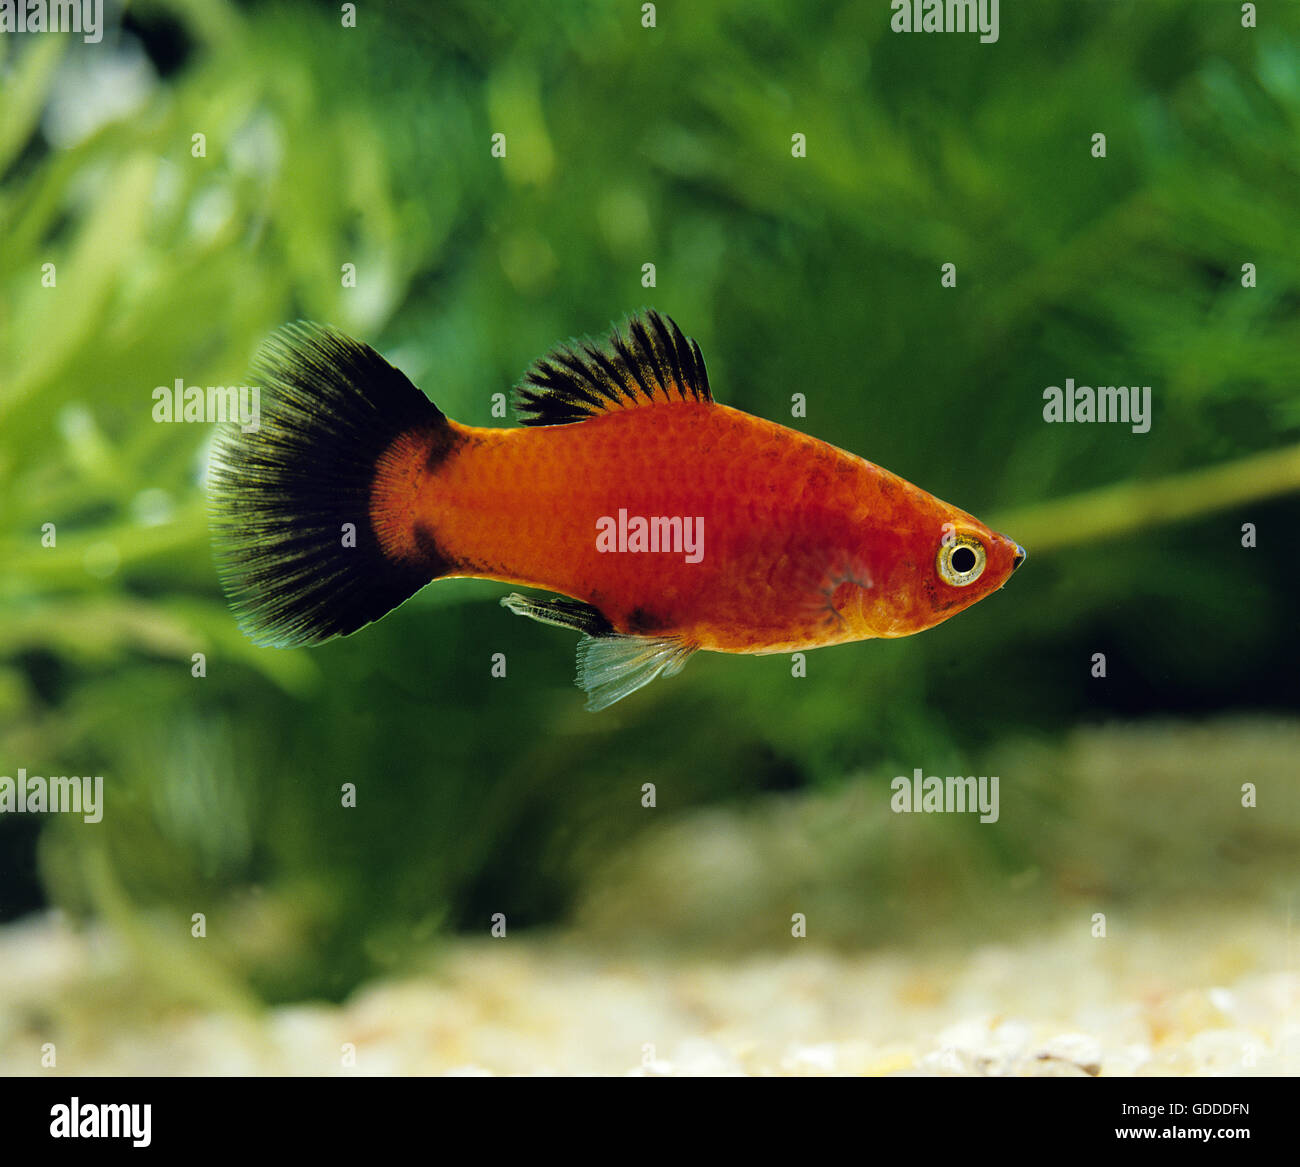 Wagtail Platy Fish, xiphophorus maculatus Stock Photo - Alamy